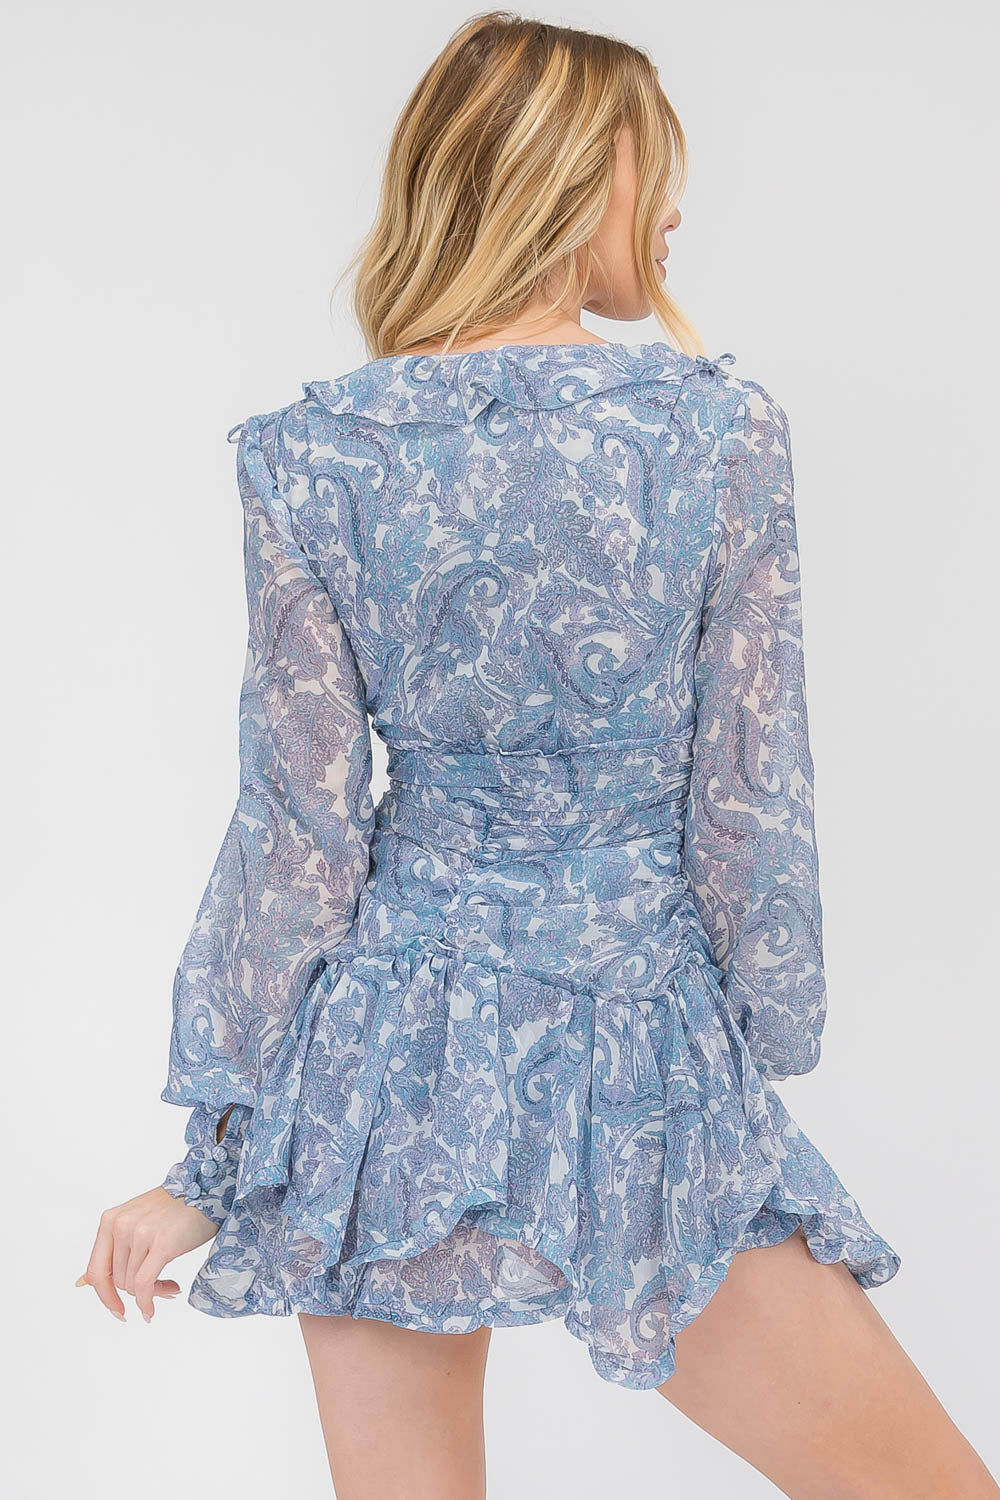 Ezra Blue Antique Floral Chiffon Ruffle Mini Dress